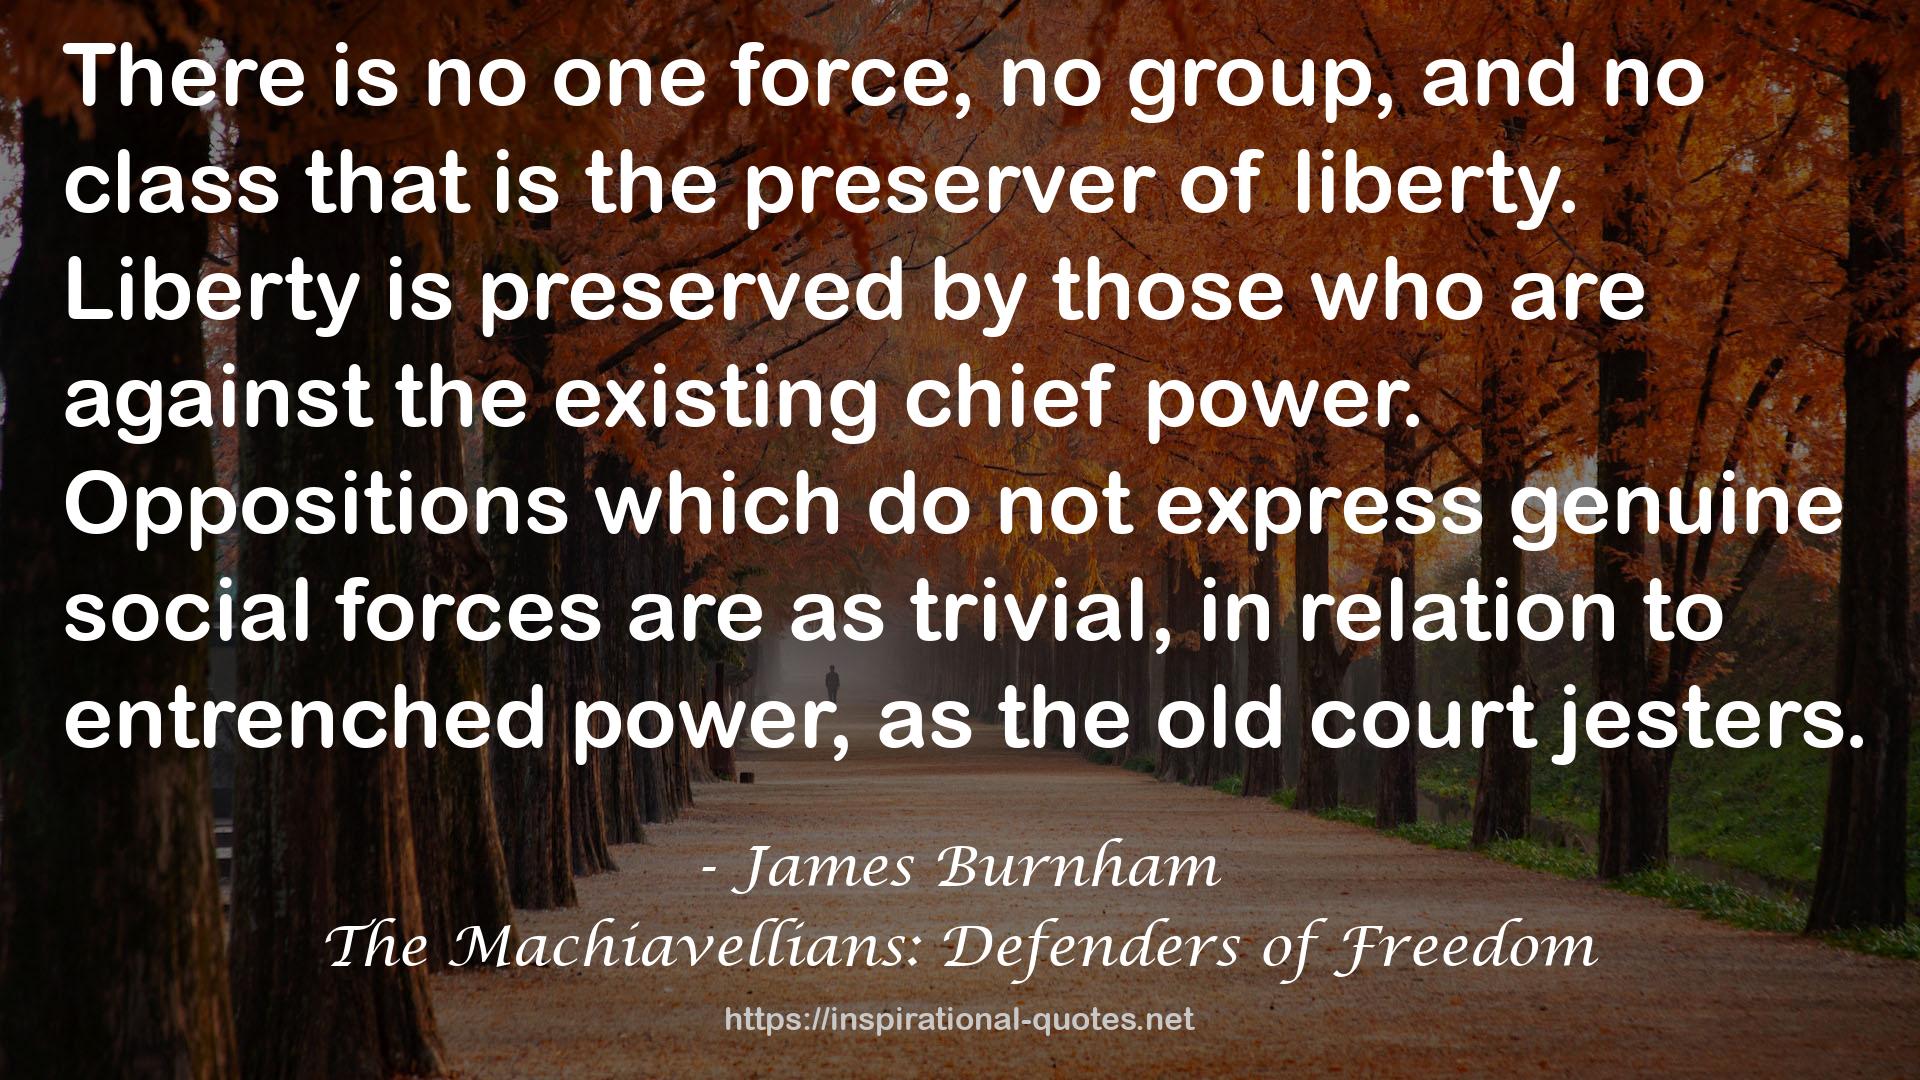 The Machiavellians: Defenders of Freedom QUOTES